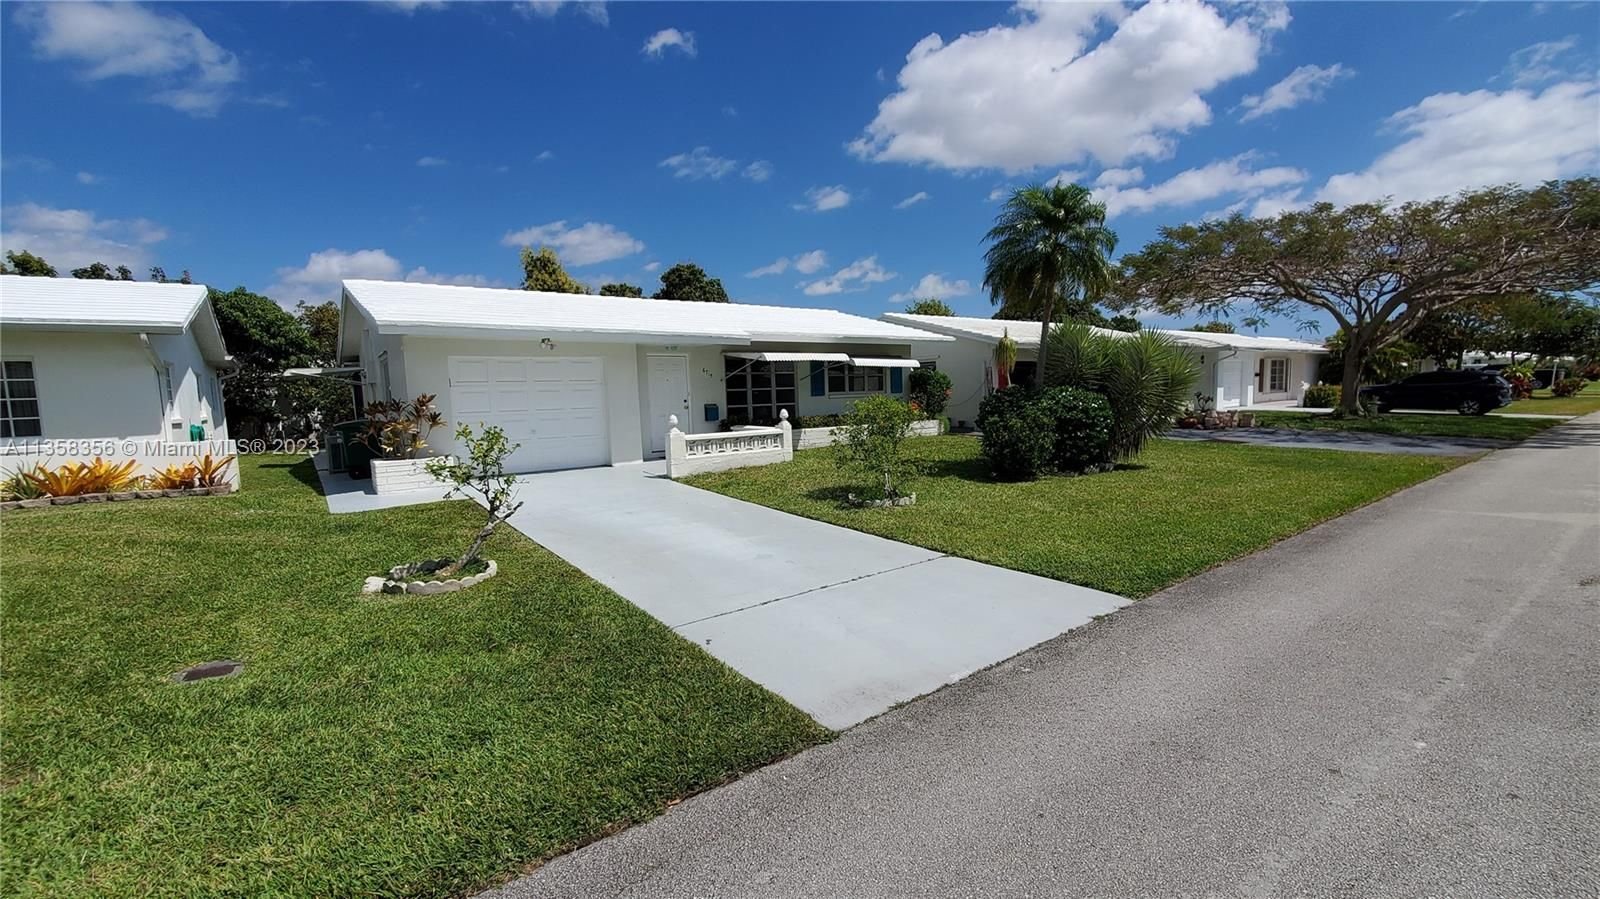 Real estate property located at 6715 71st St, Broward County, Tamarac, FL